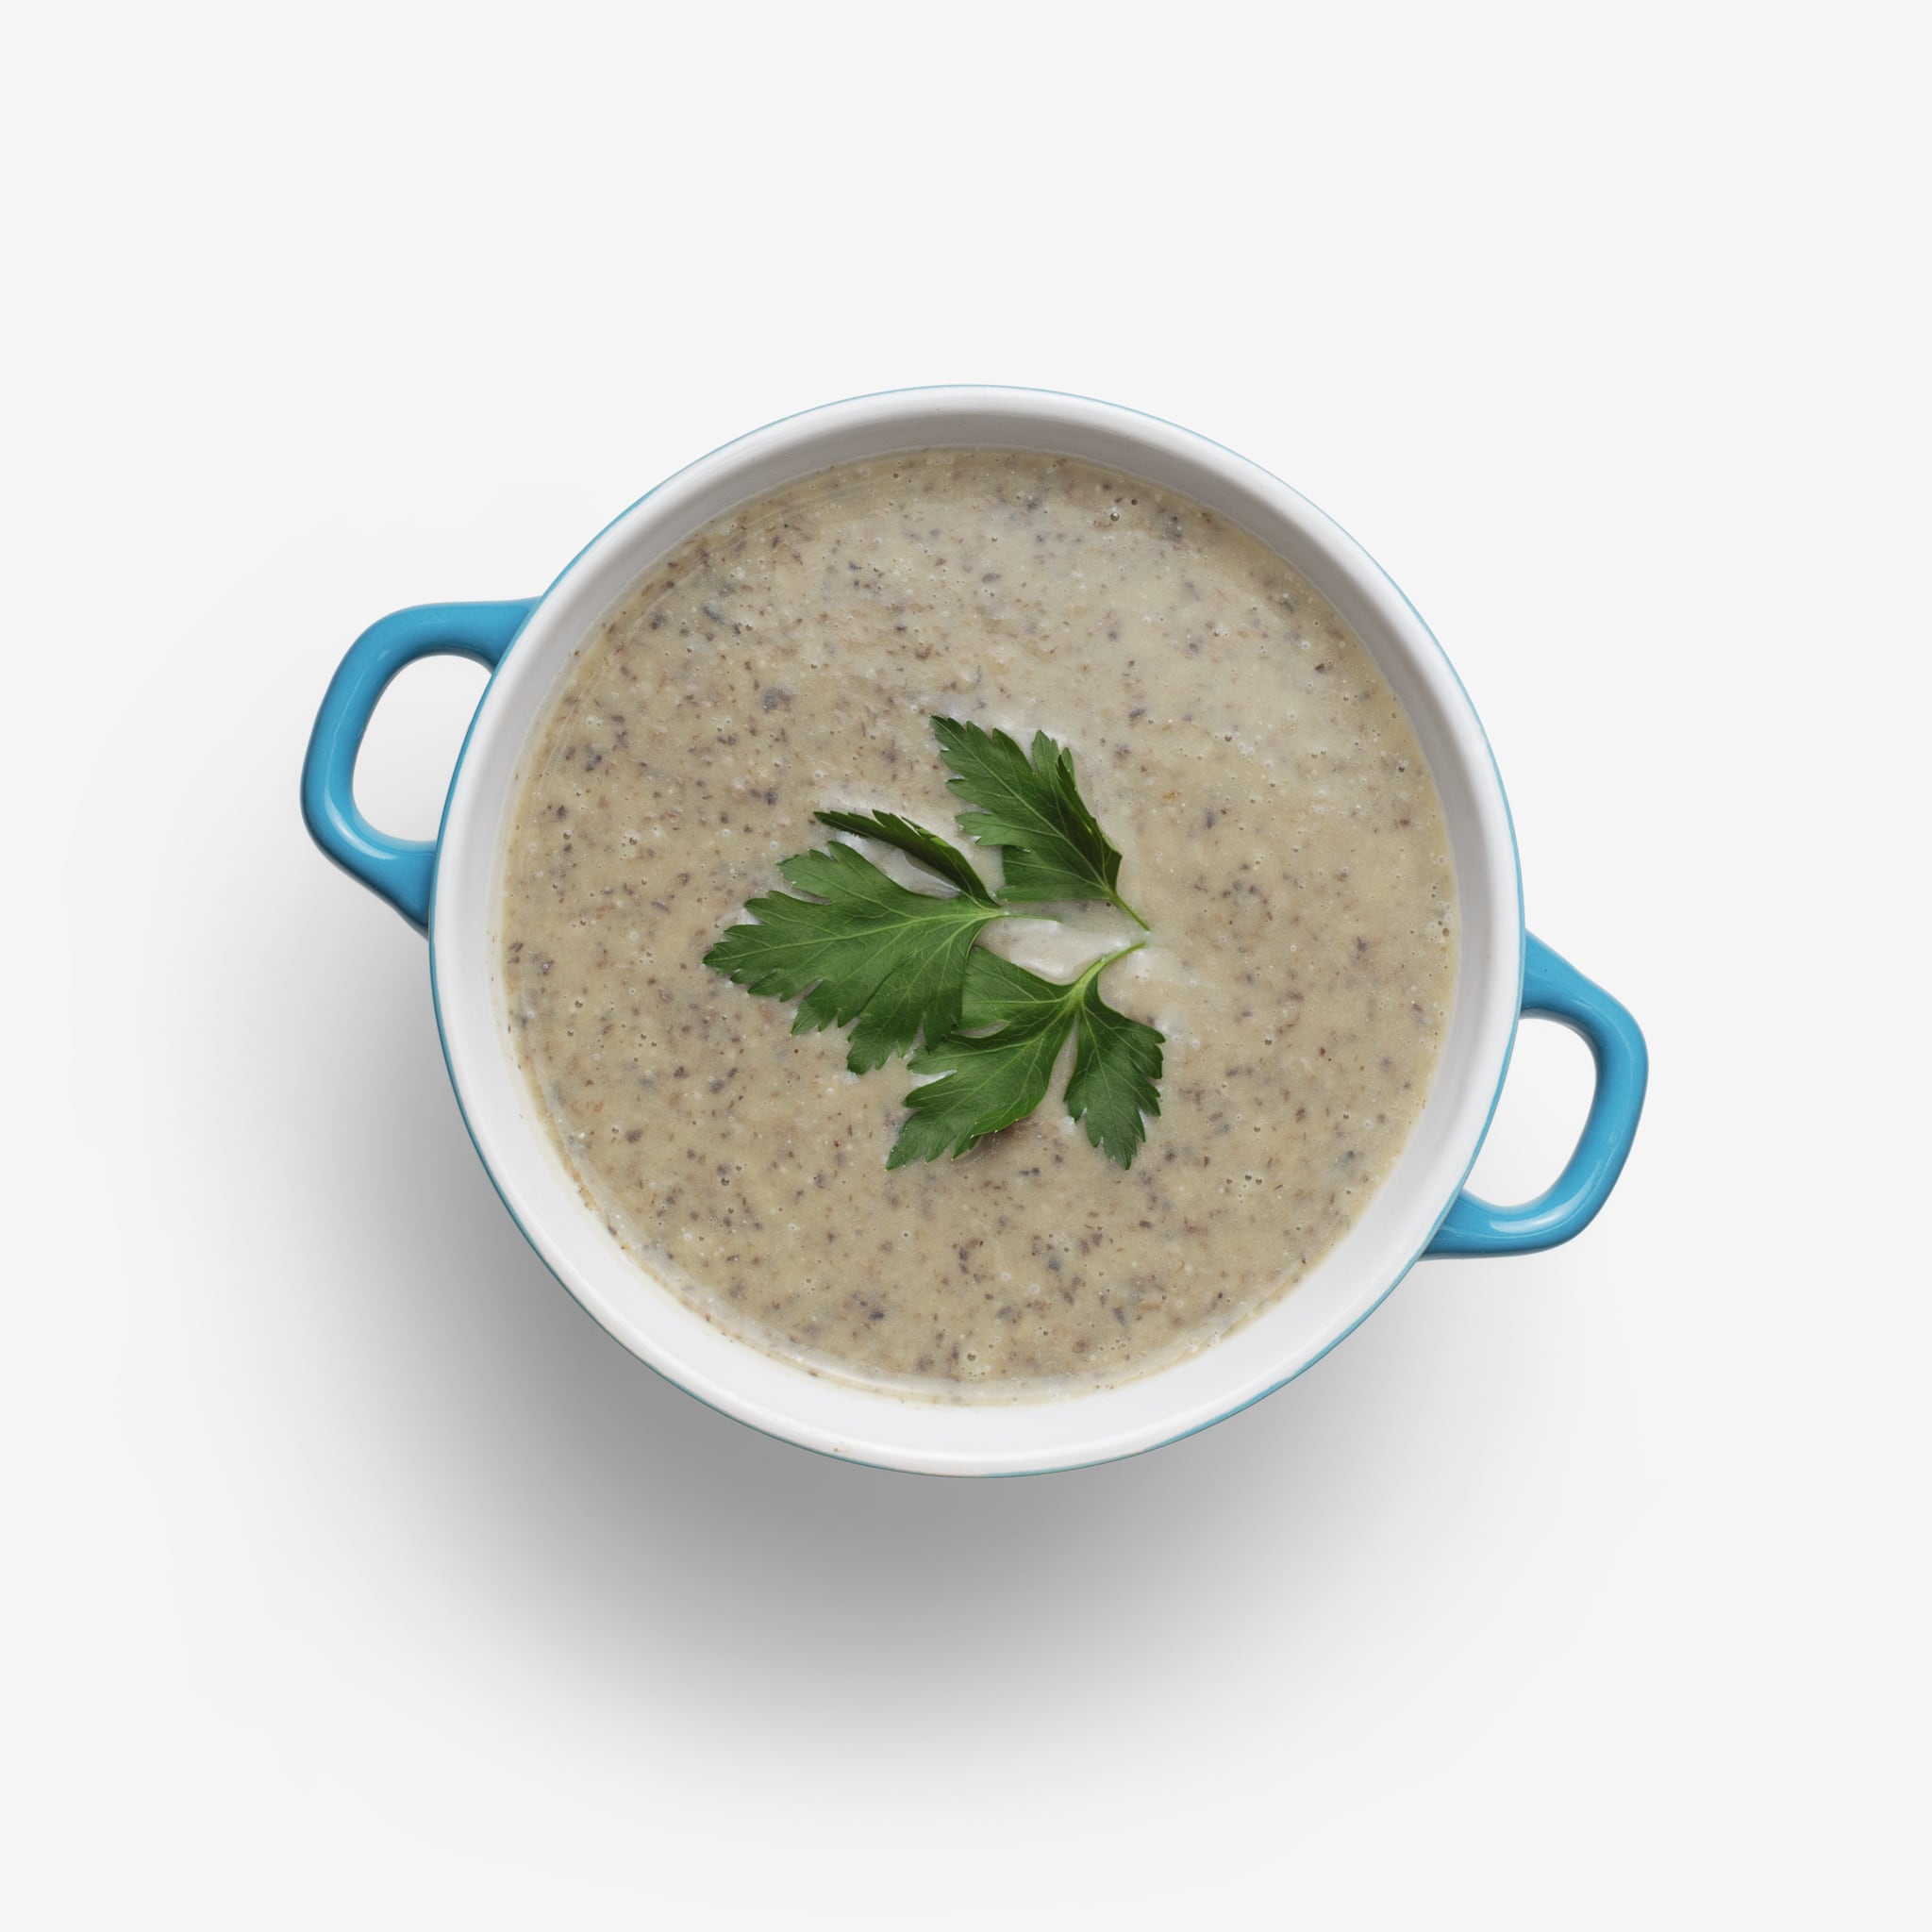 Soup PSD layered image